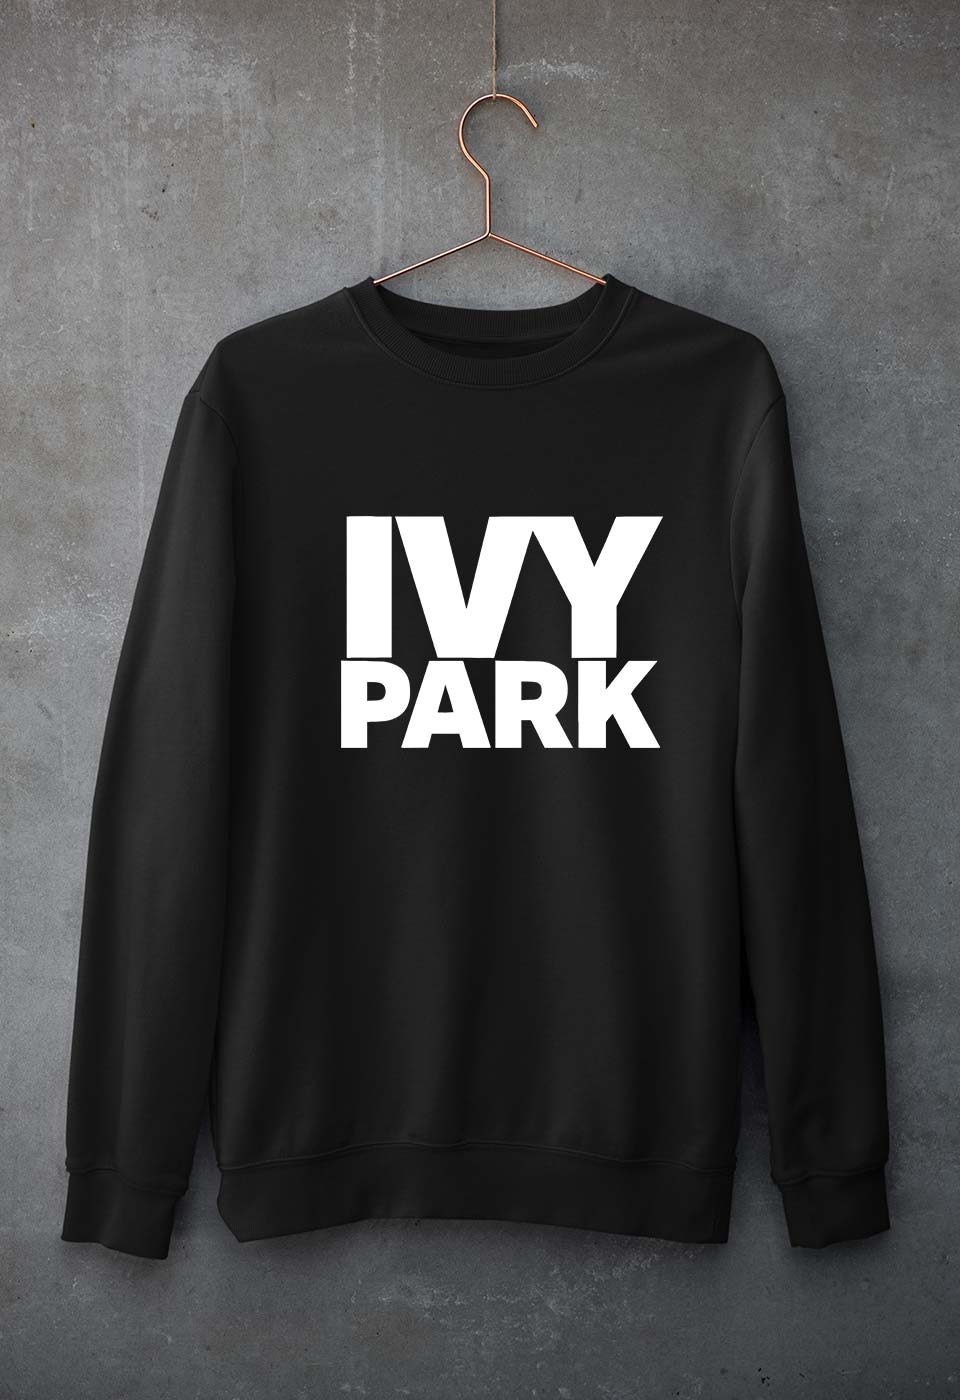 Ivy Park Unisex Sweatshirt for Men/Women-S(40 Inches)-Black-Ektarfa.online